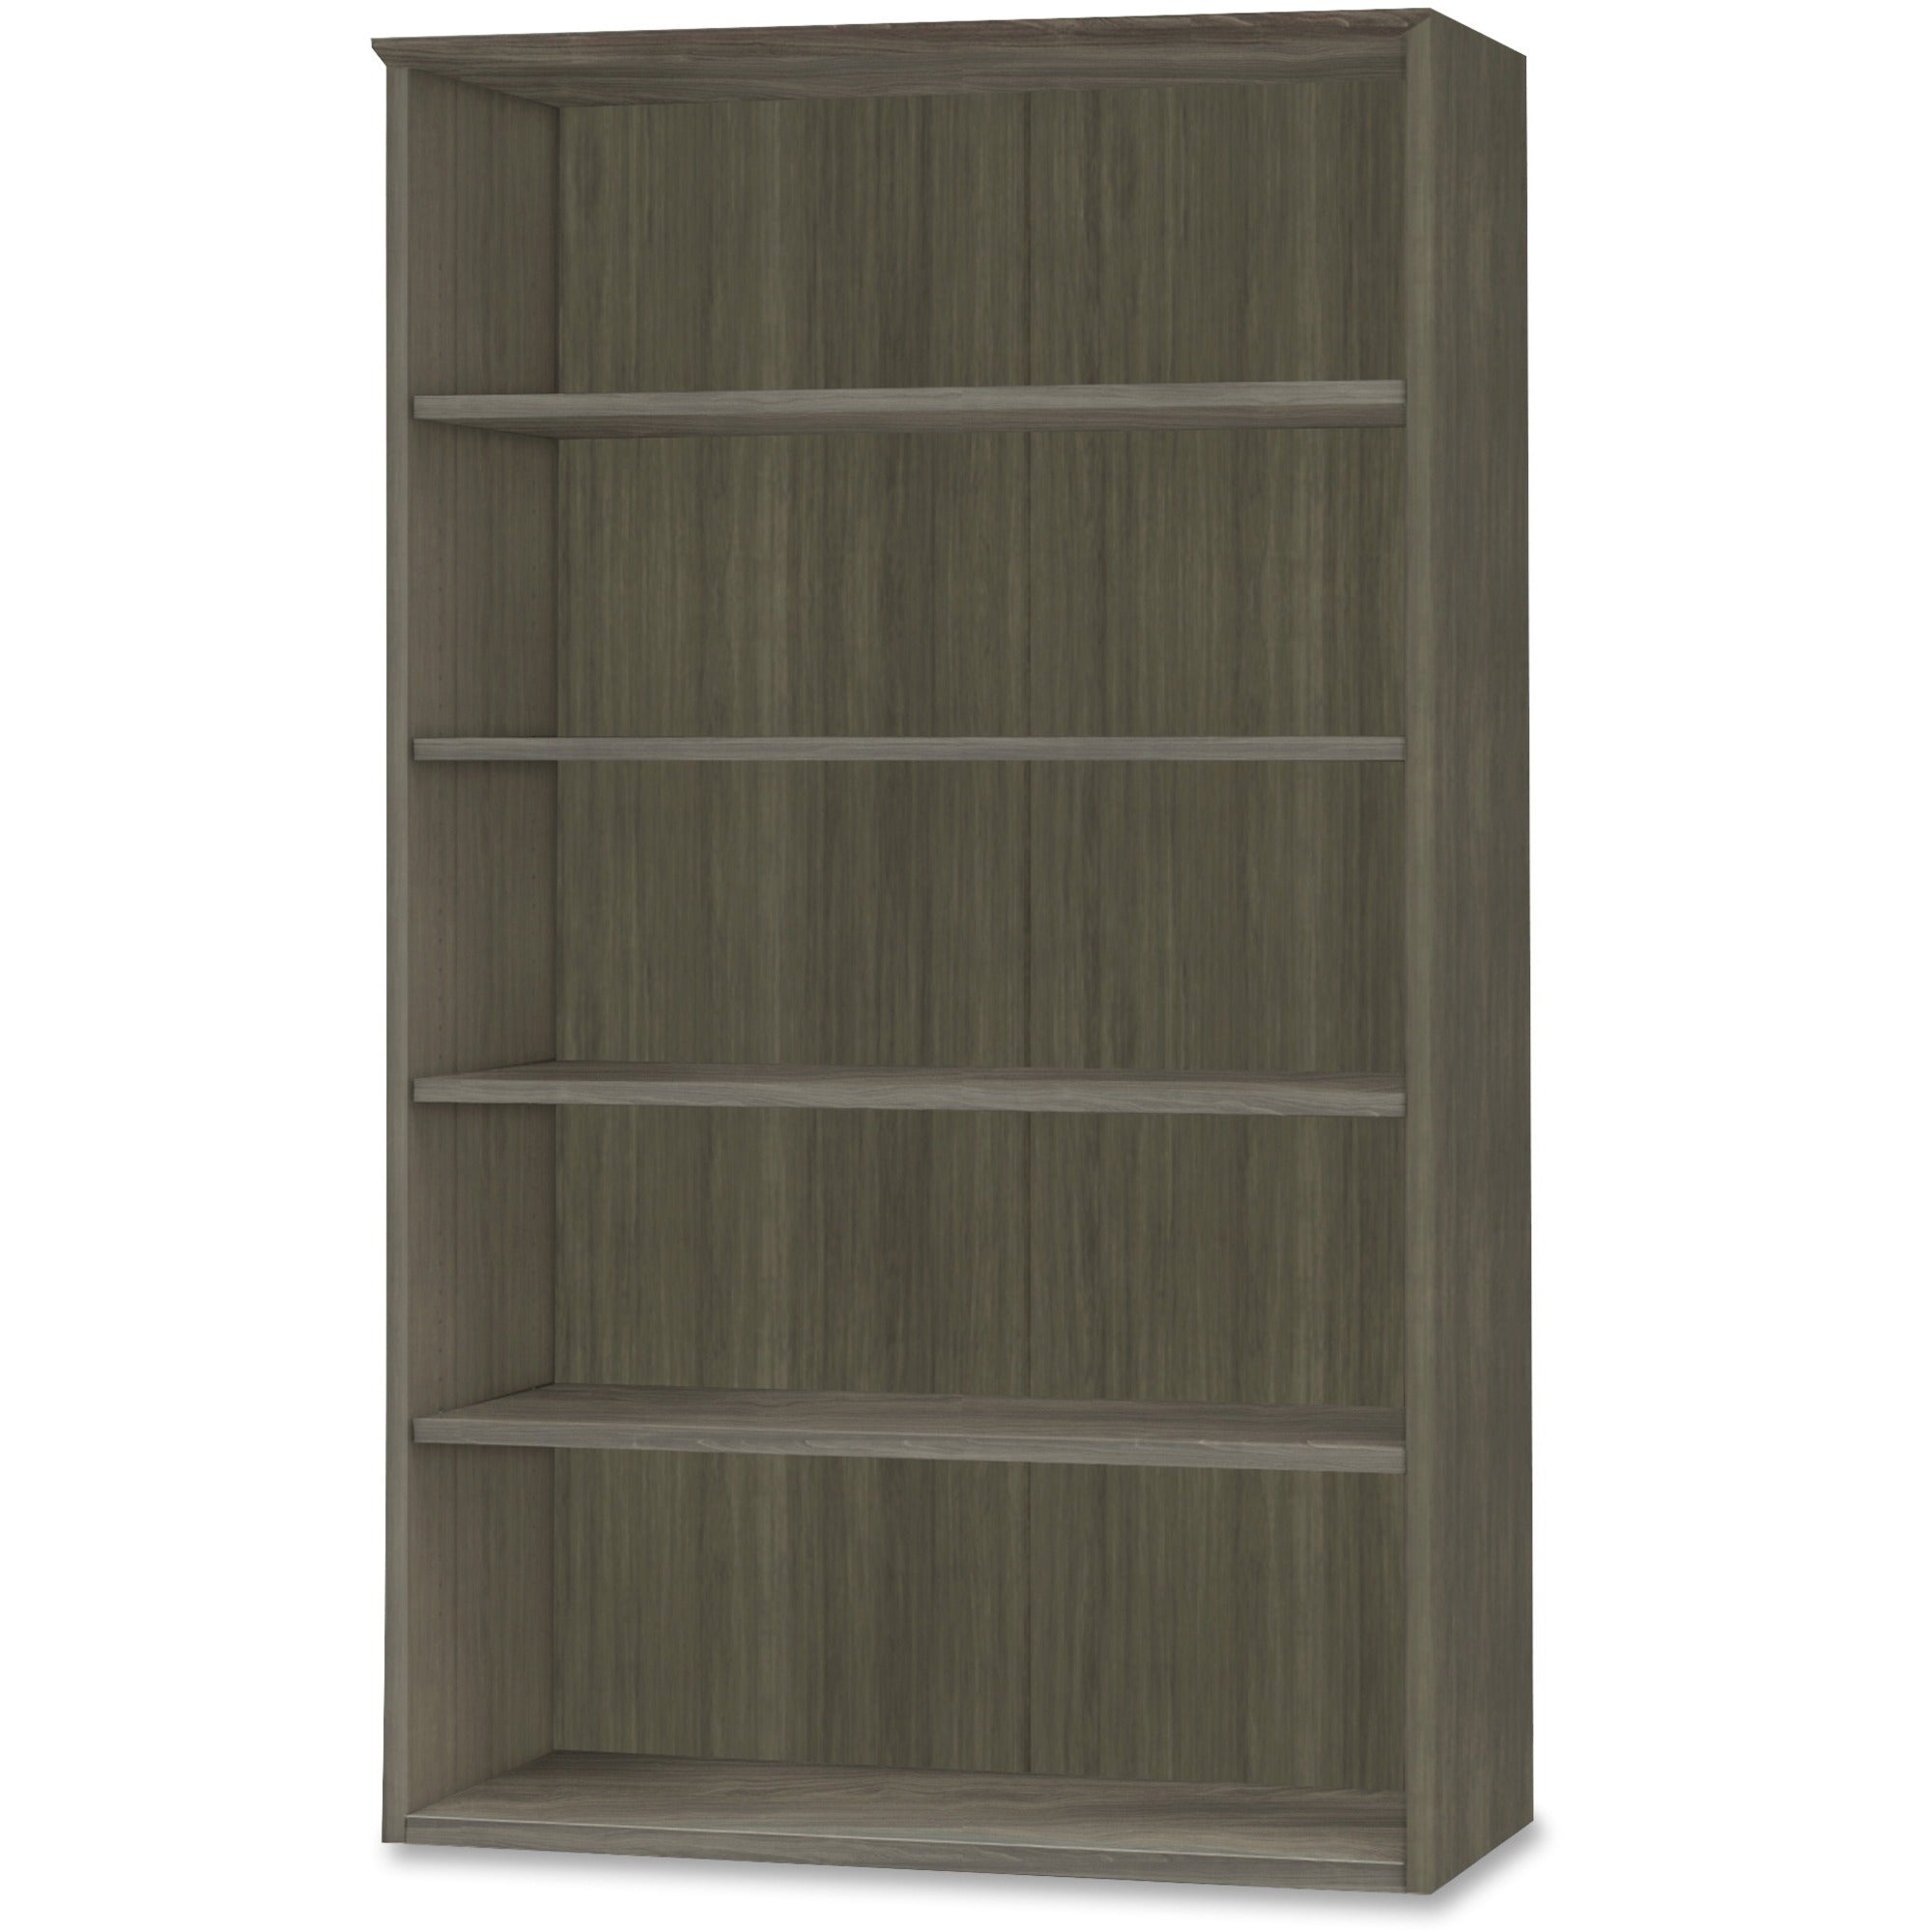 mayline-medina-series-gray-laminate-5-shelf-bookcase-36-x-1368-bookshelf-1-shelf-5-shelves-4-adjustable-shelfves-finish-gray-steel-laminate-stain-resistant-water-resistant-abrasion-resistant-durable-leveler-for-book_mlnmvb5lgs - 1